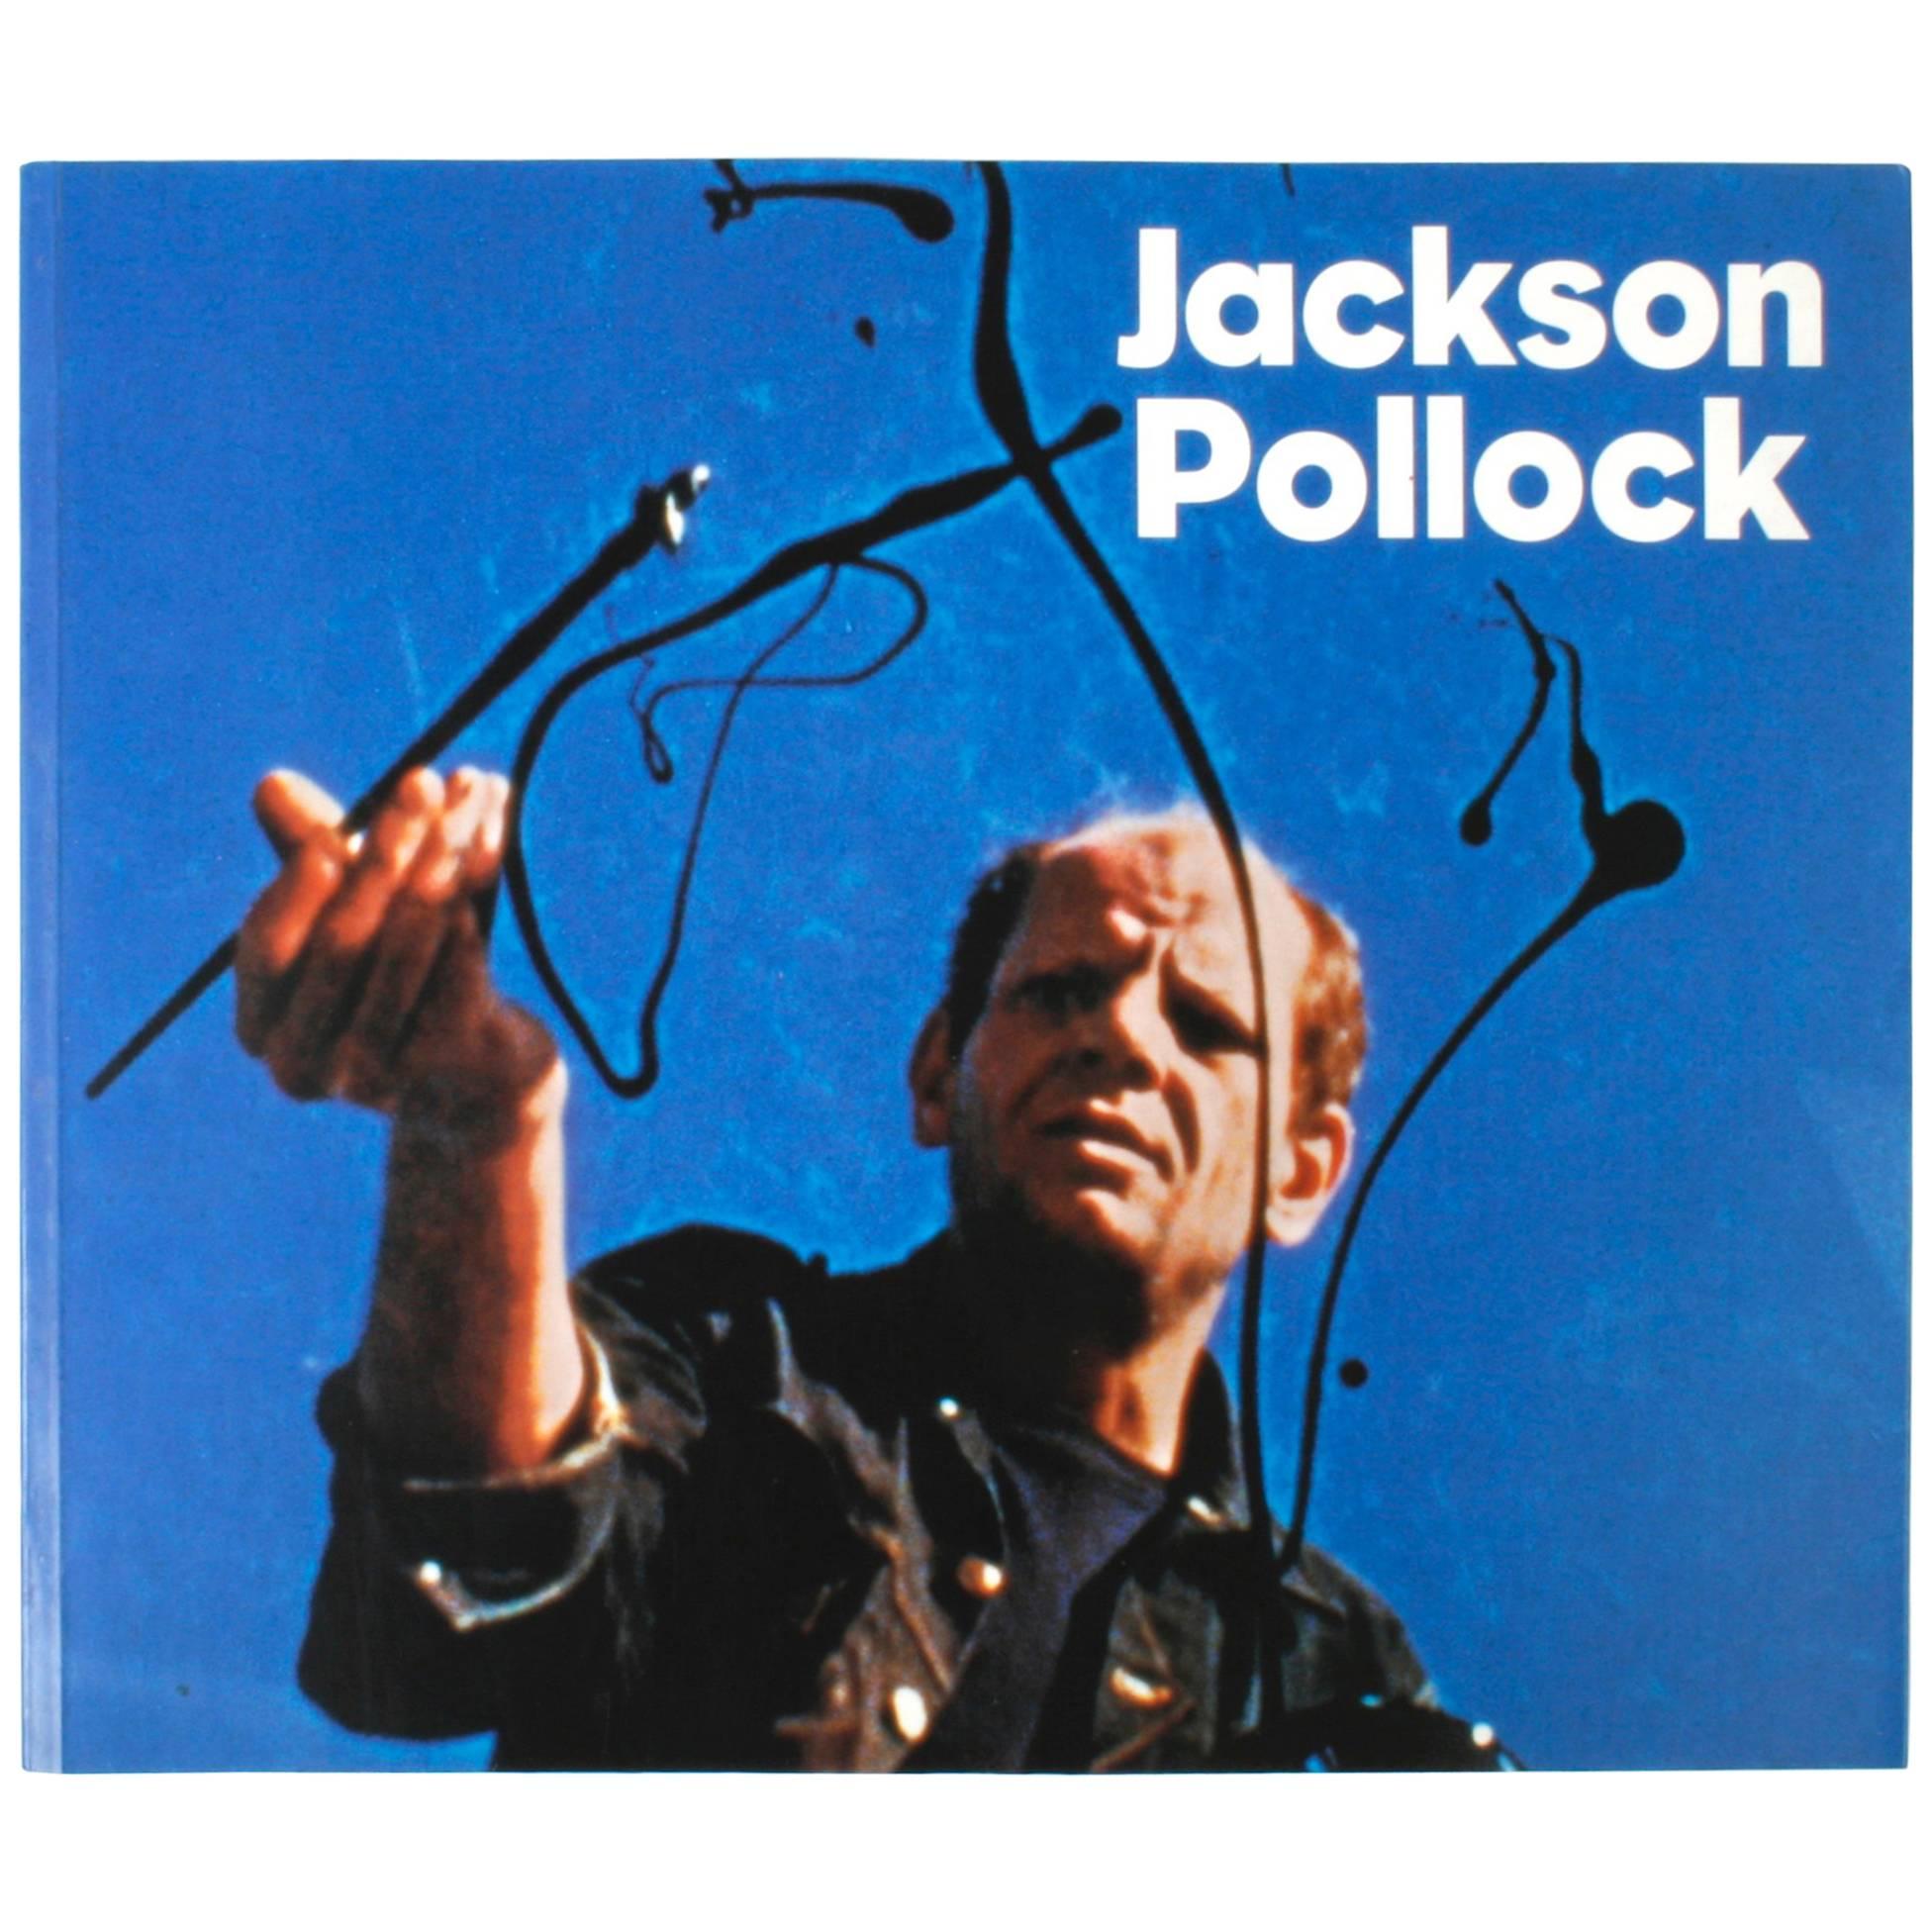 Jackson Pollock by Kirk Varnedoe and Pepe Karmel, First Edition